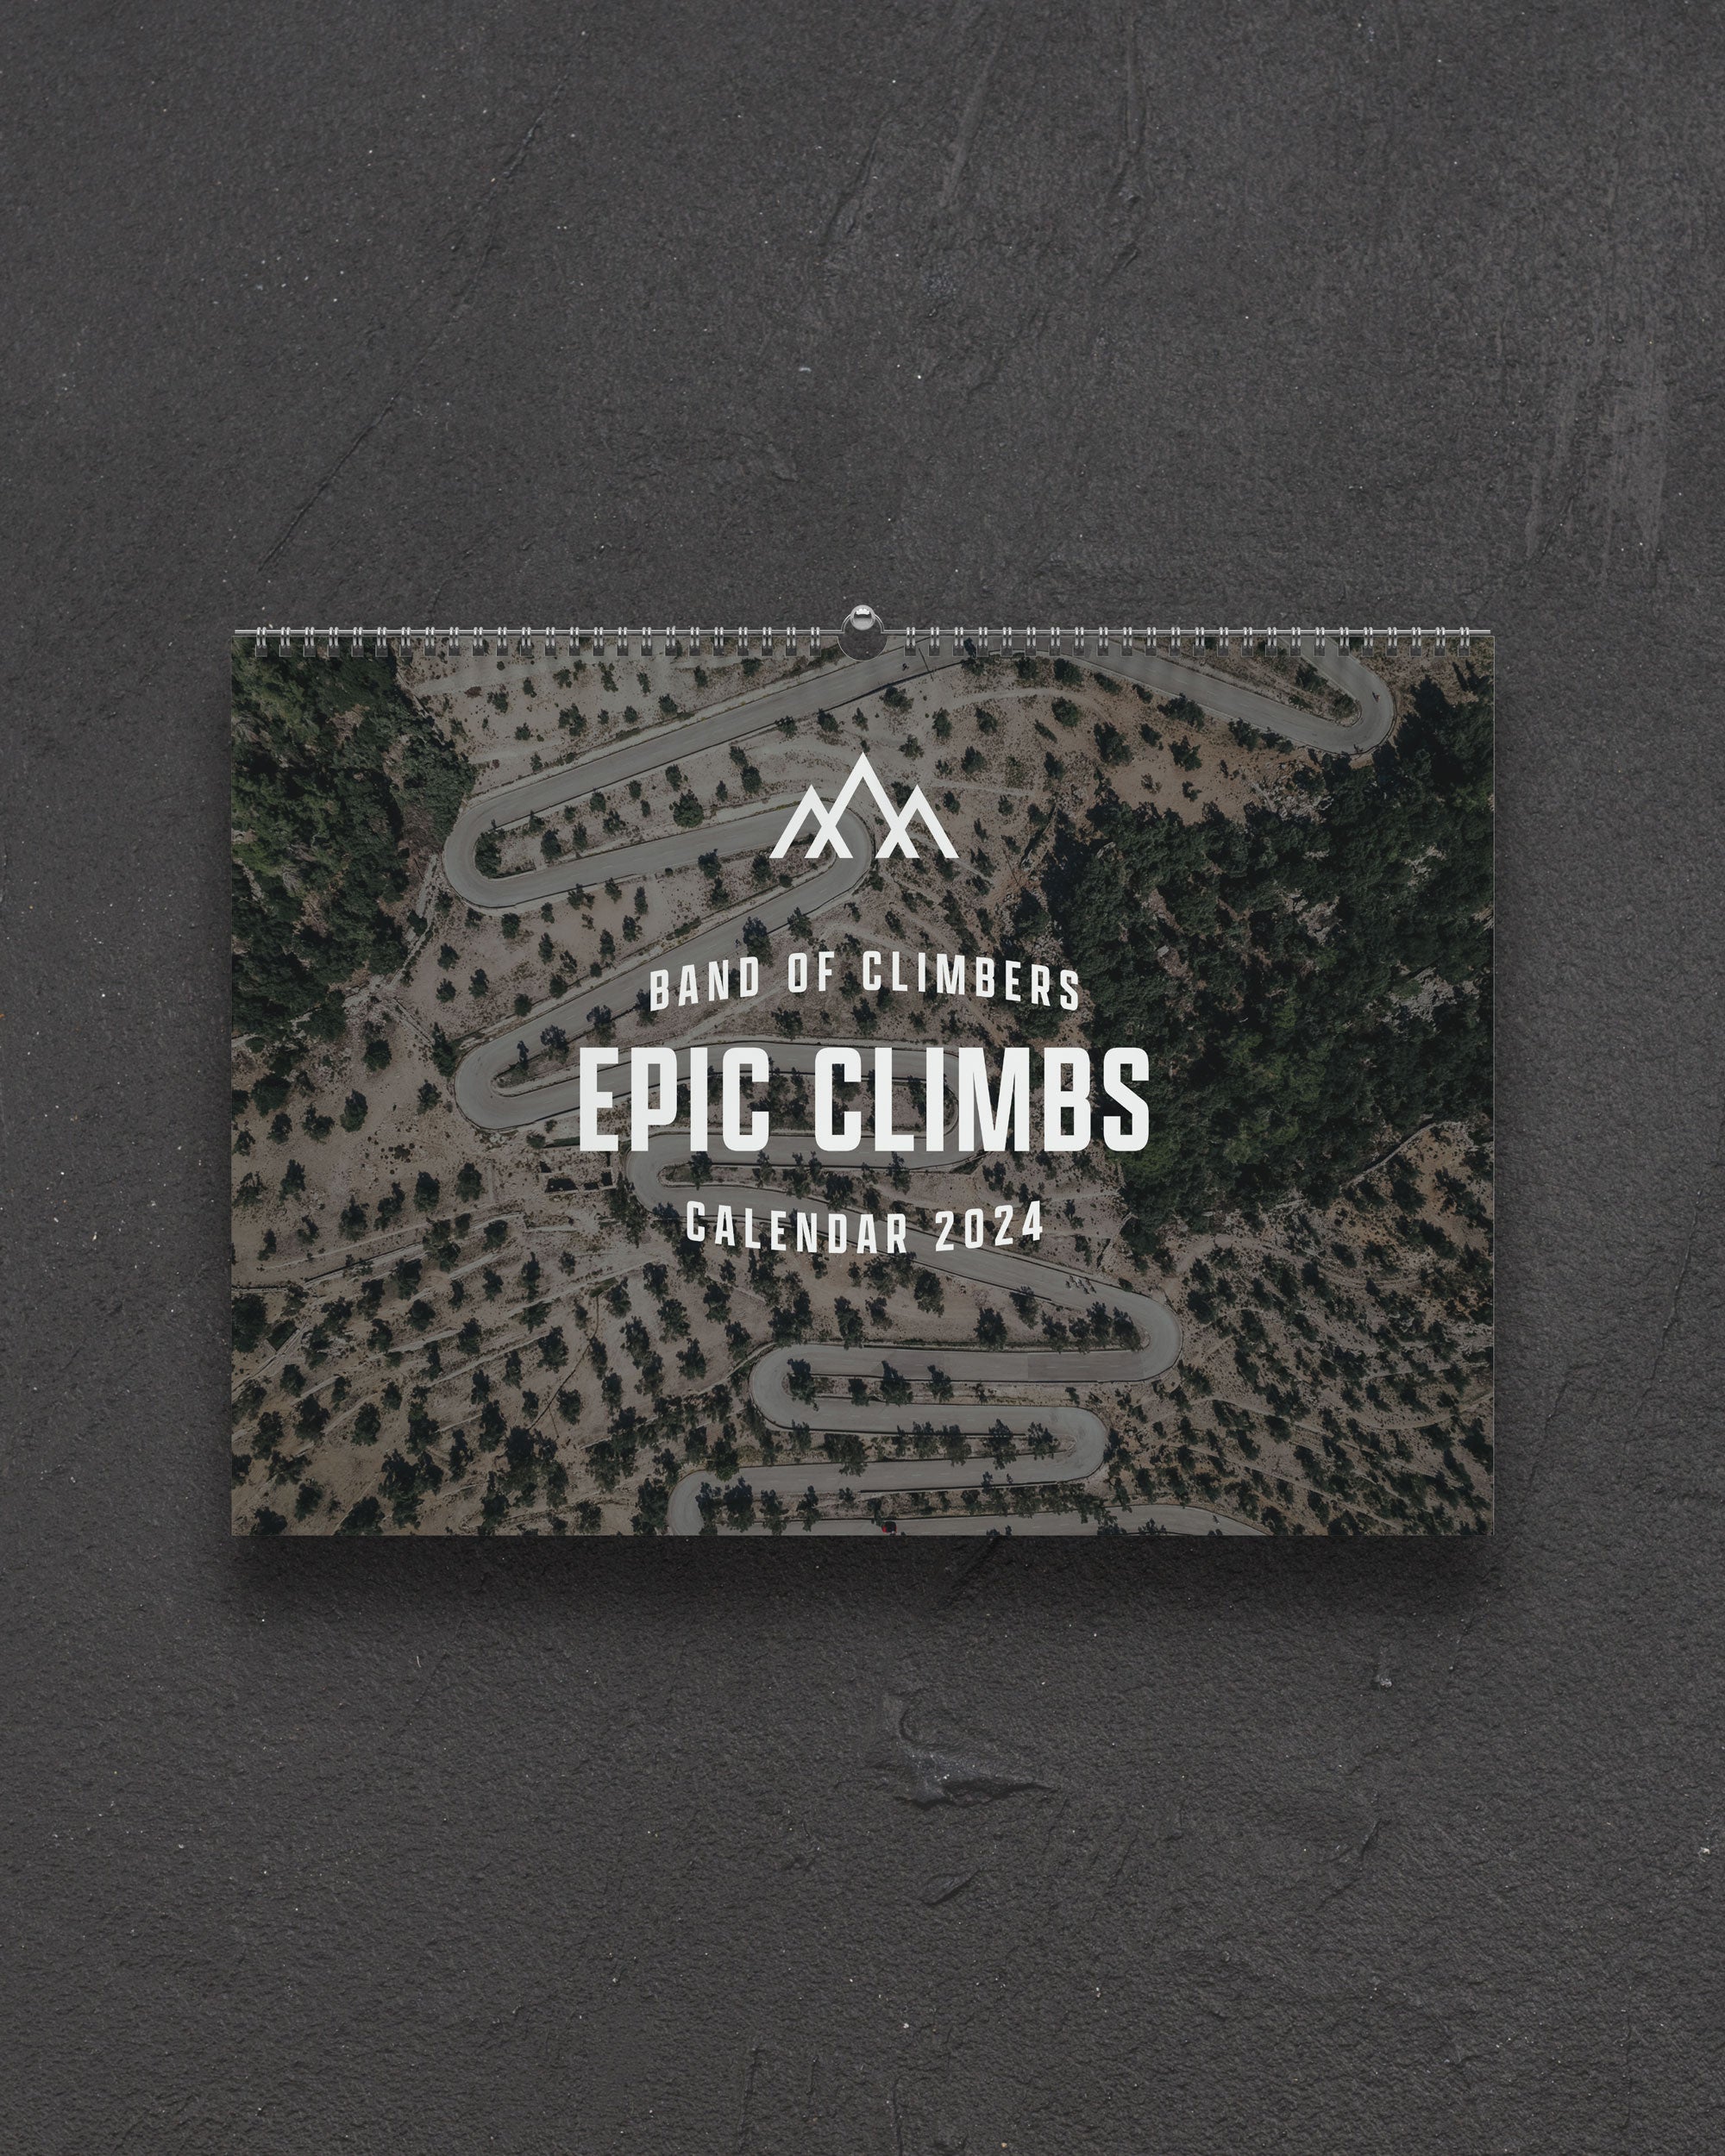 The Band of Climbers Epic Climbs Calendar 2024